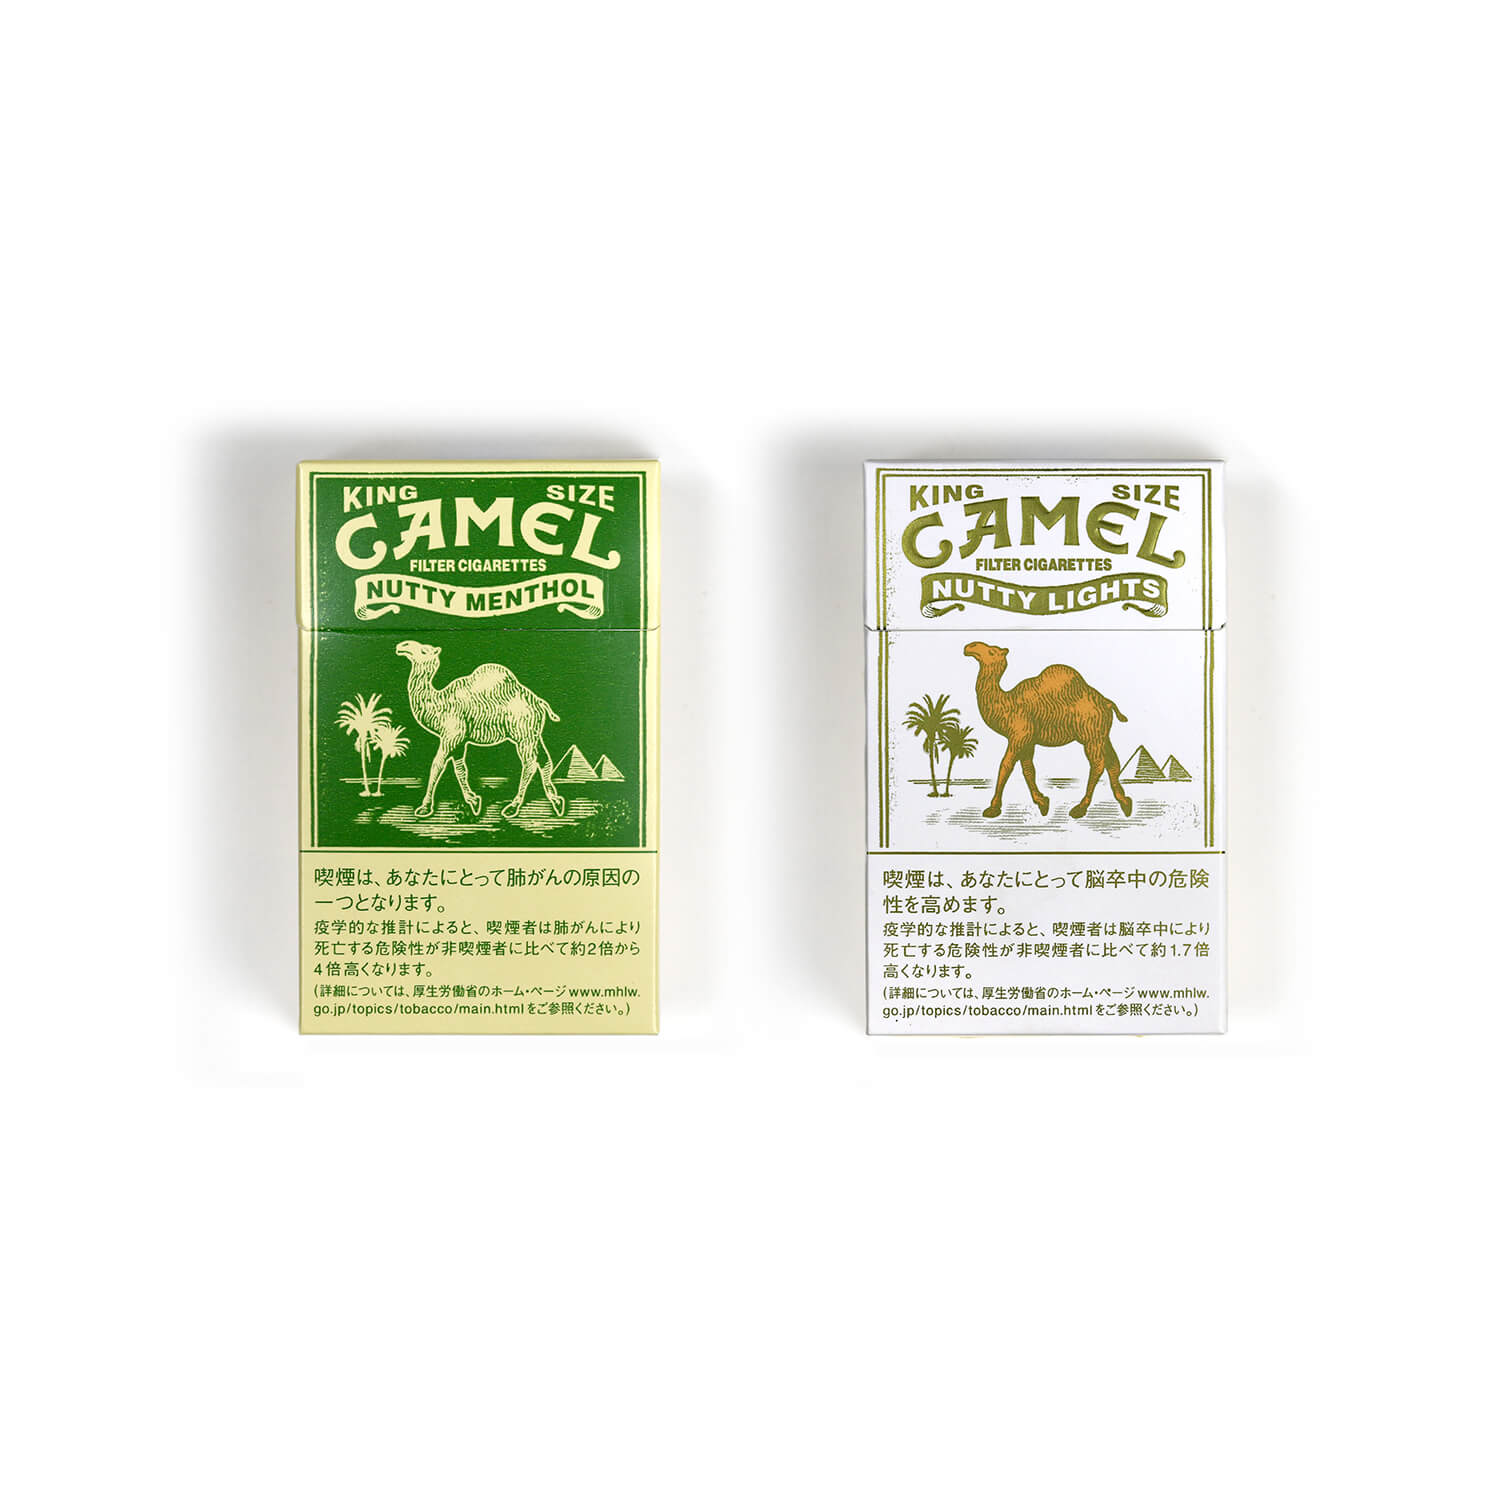 CAMEL MENTHOLのパッケージデザイン